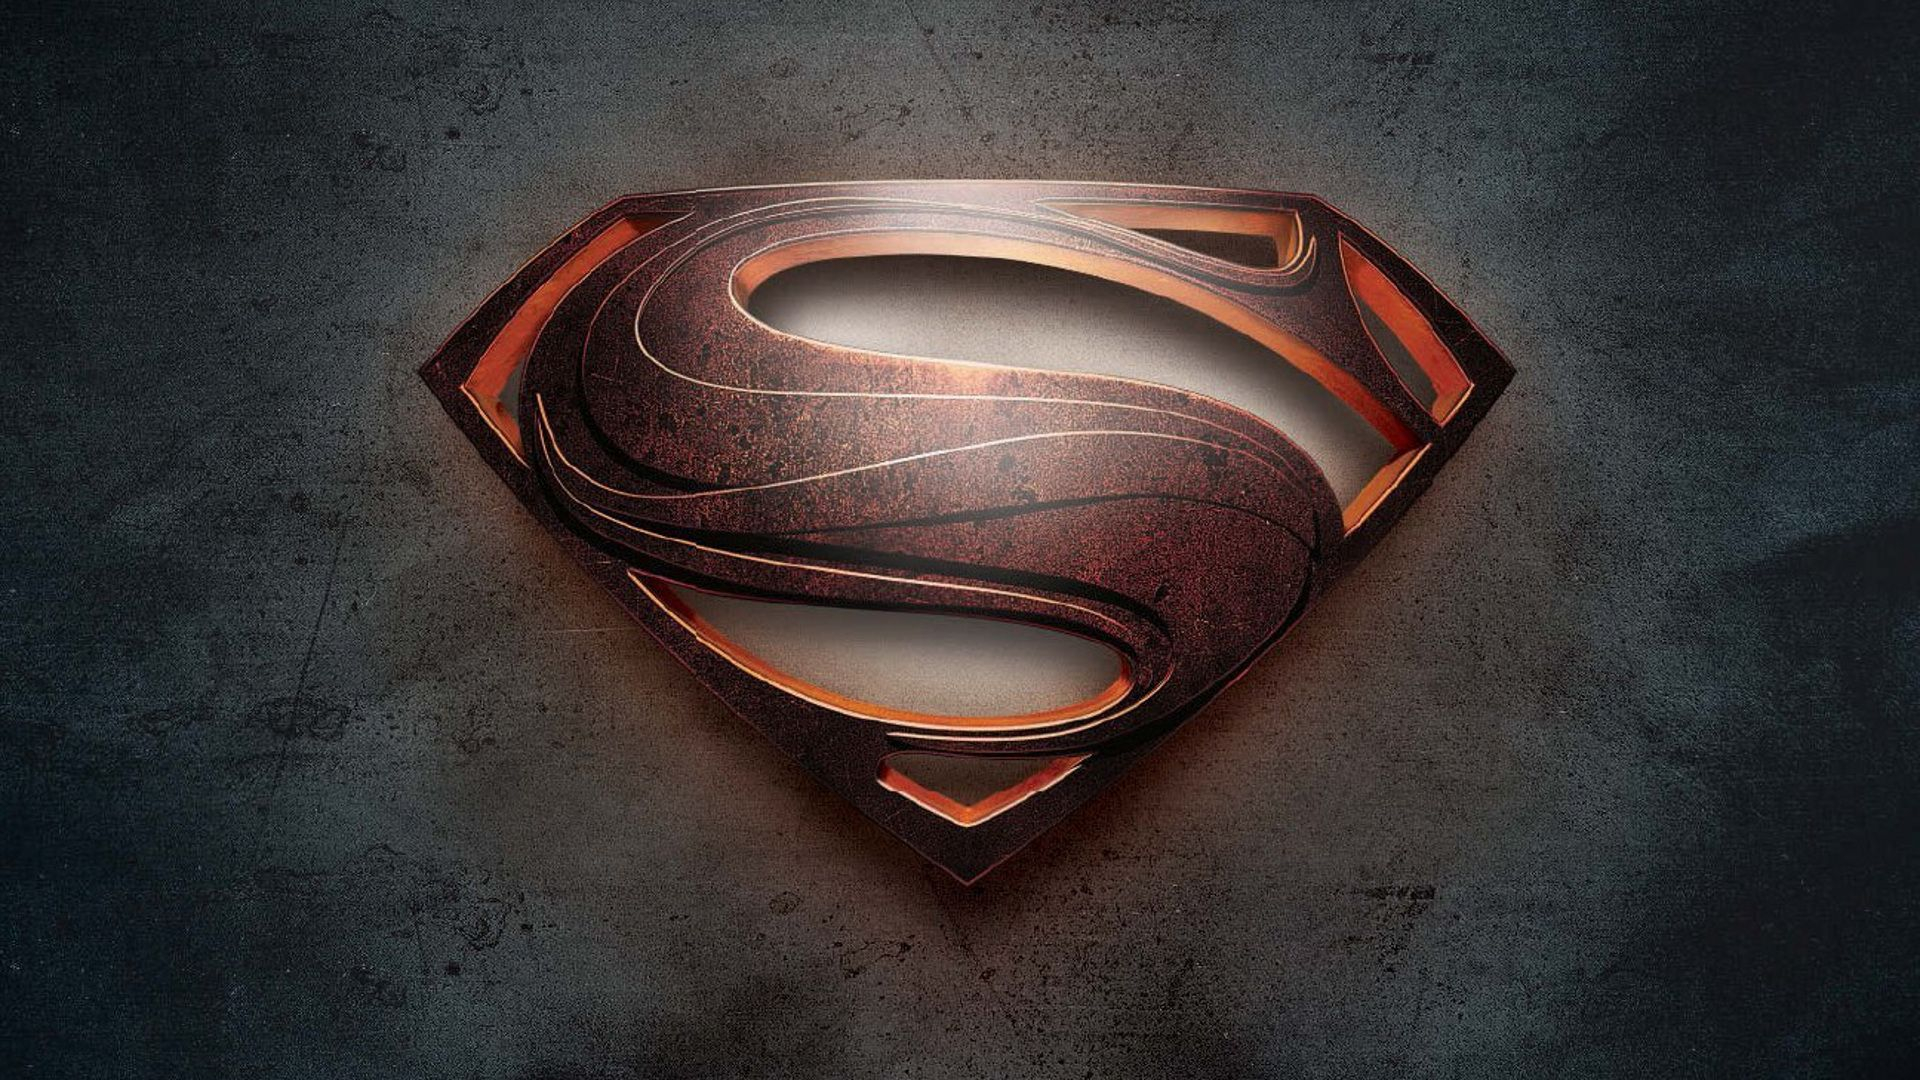 1920x1080 Superman Man of Steel | Wallpaper do superman, Superman logo, Simbolo do superma